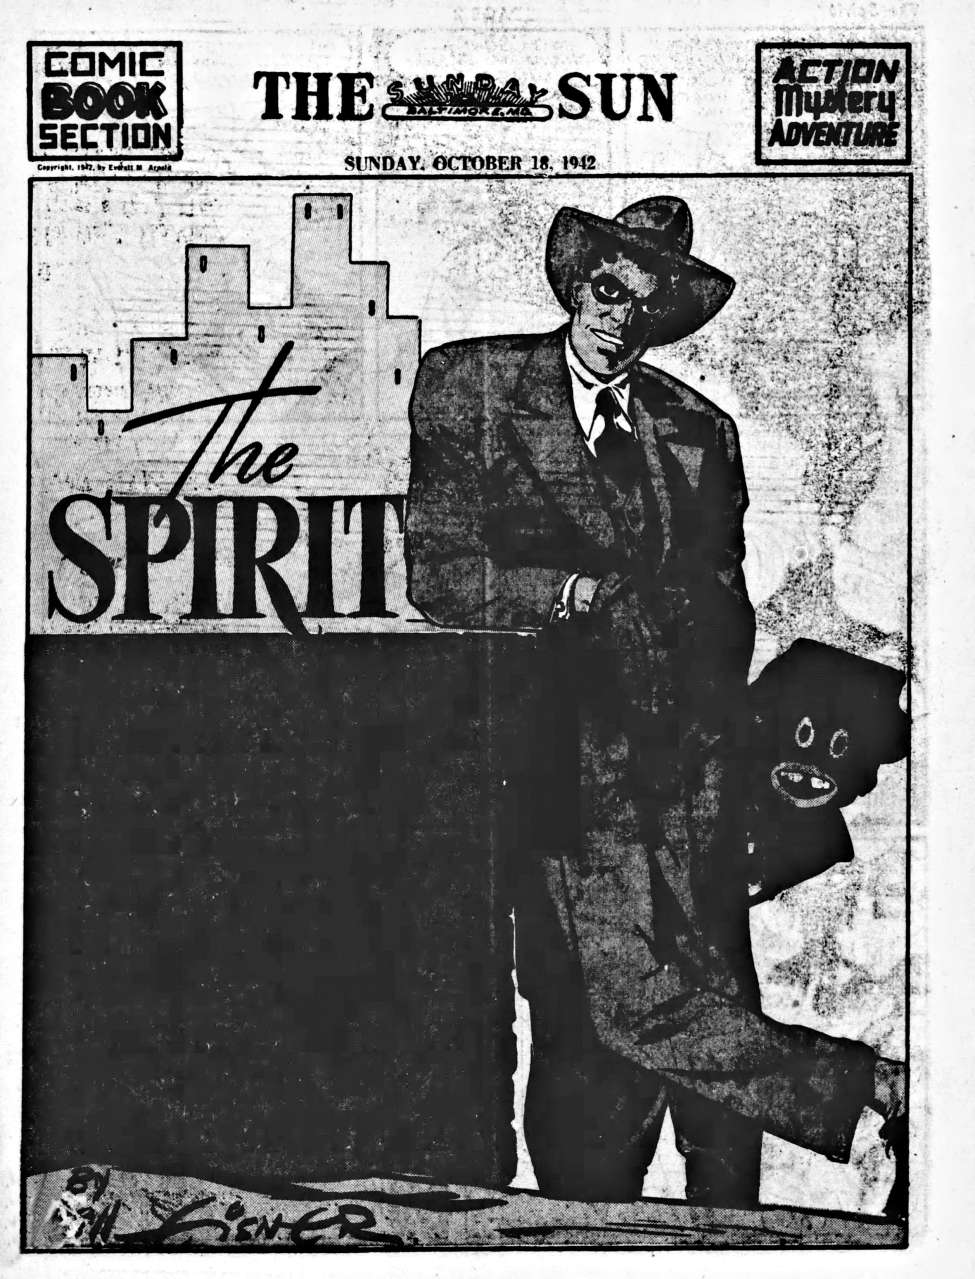 Book Cover For The Spirit (1942-10-18) - Baltimore Sun (b/w)